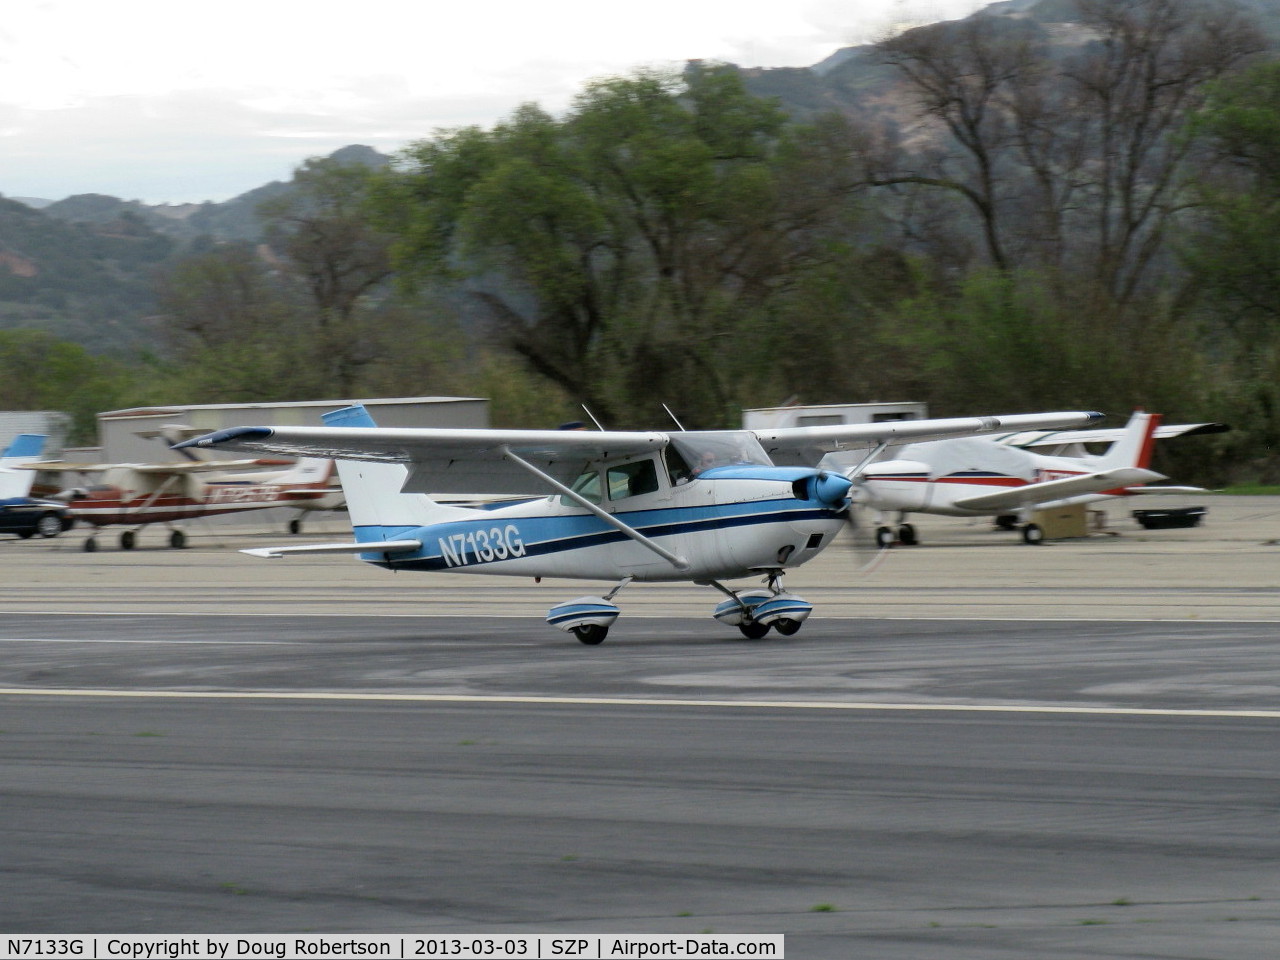 N7133G, 1969 Cessna 172K Skyhawk C/N 17258833, 1969 Cessna 172K SKYHAWK, Lycoming O-320-E2D 150 Hp, landing roll Rwy 22